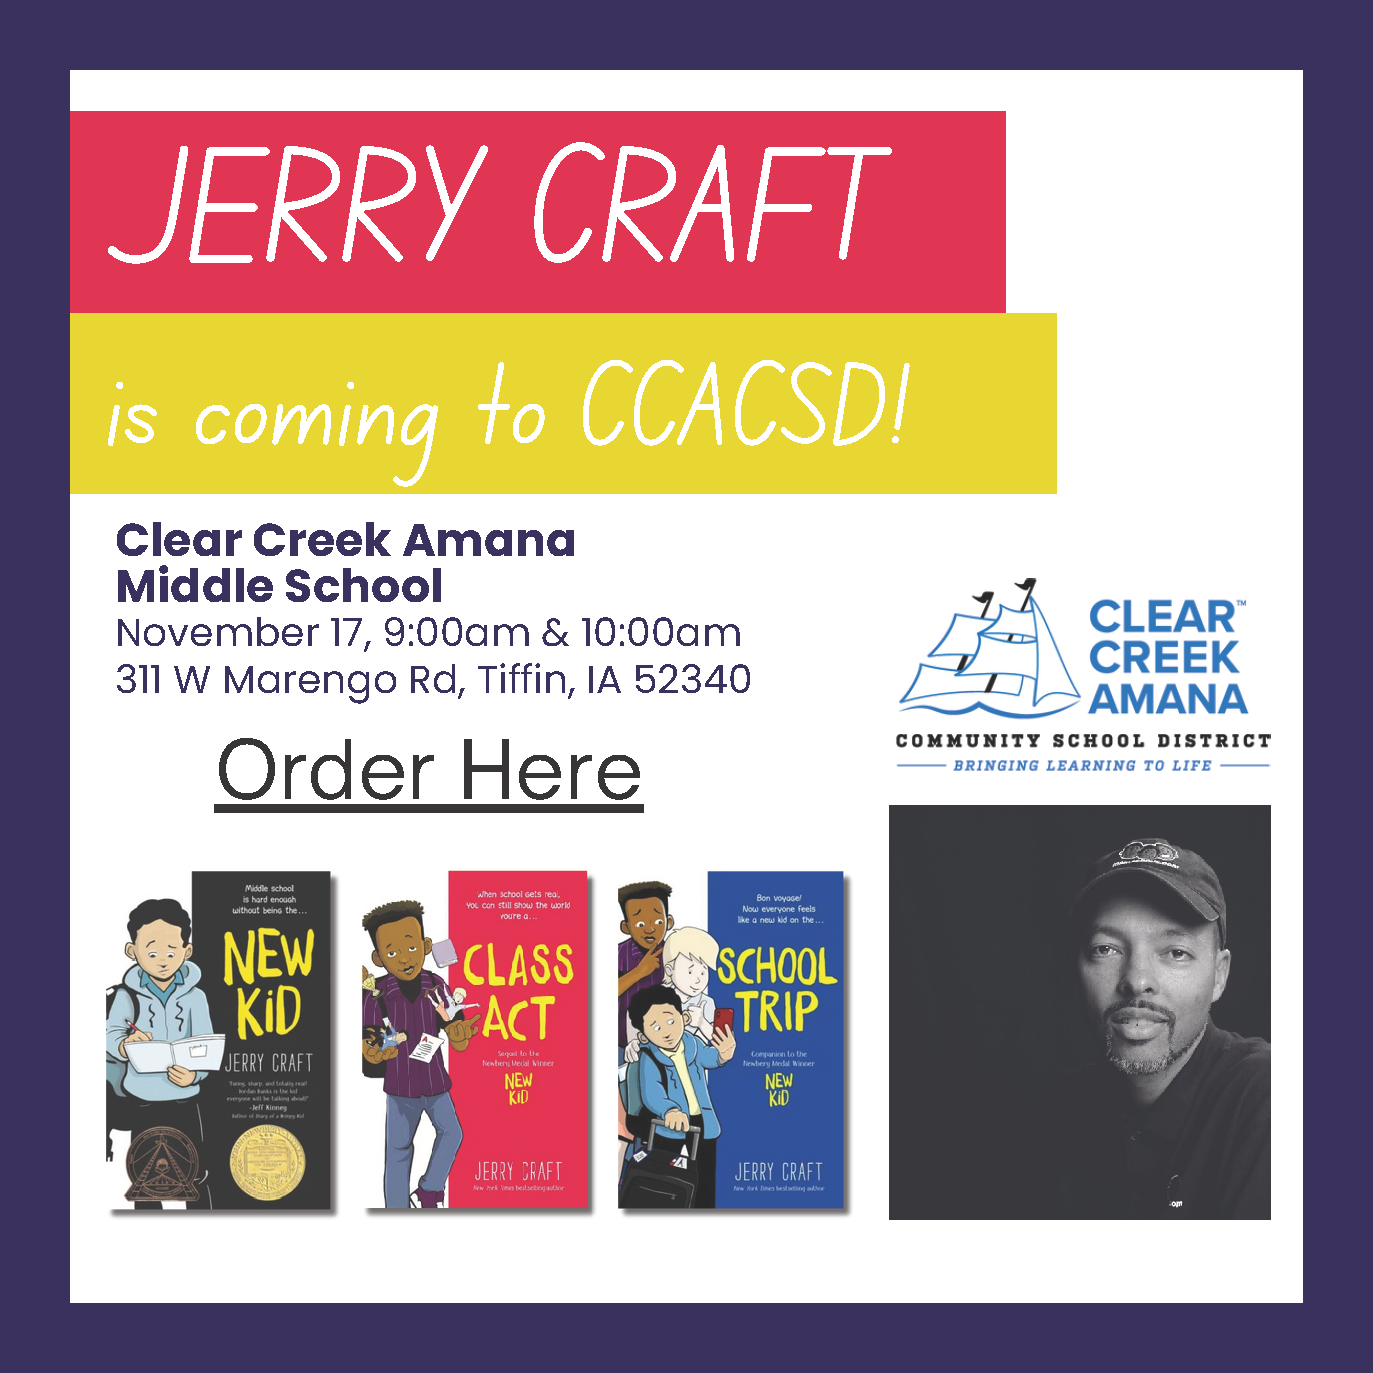 Jerry Croft Event